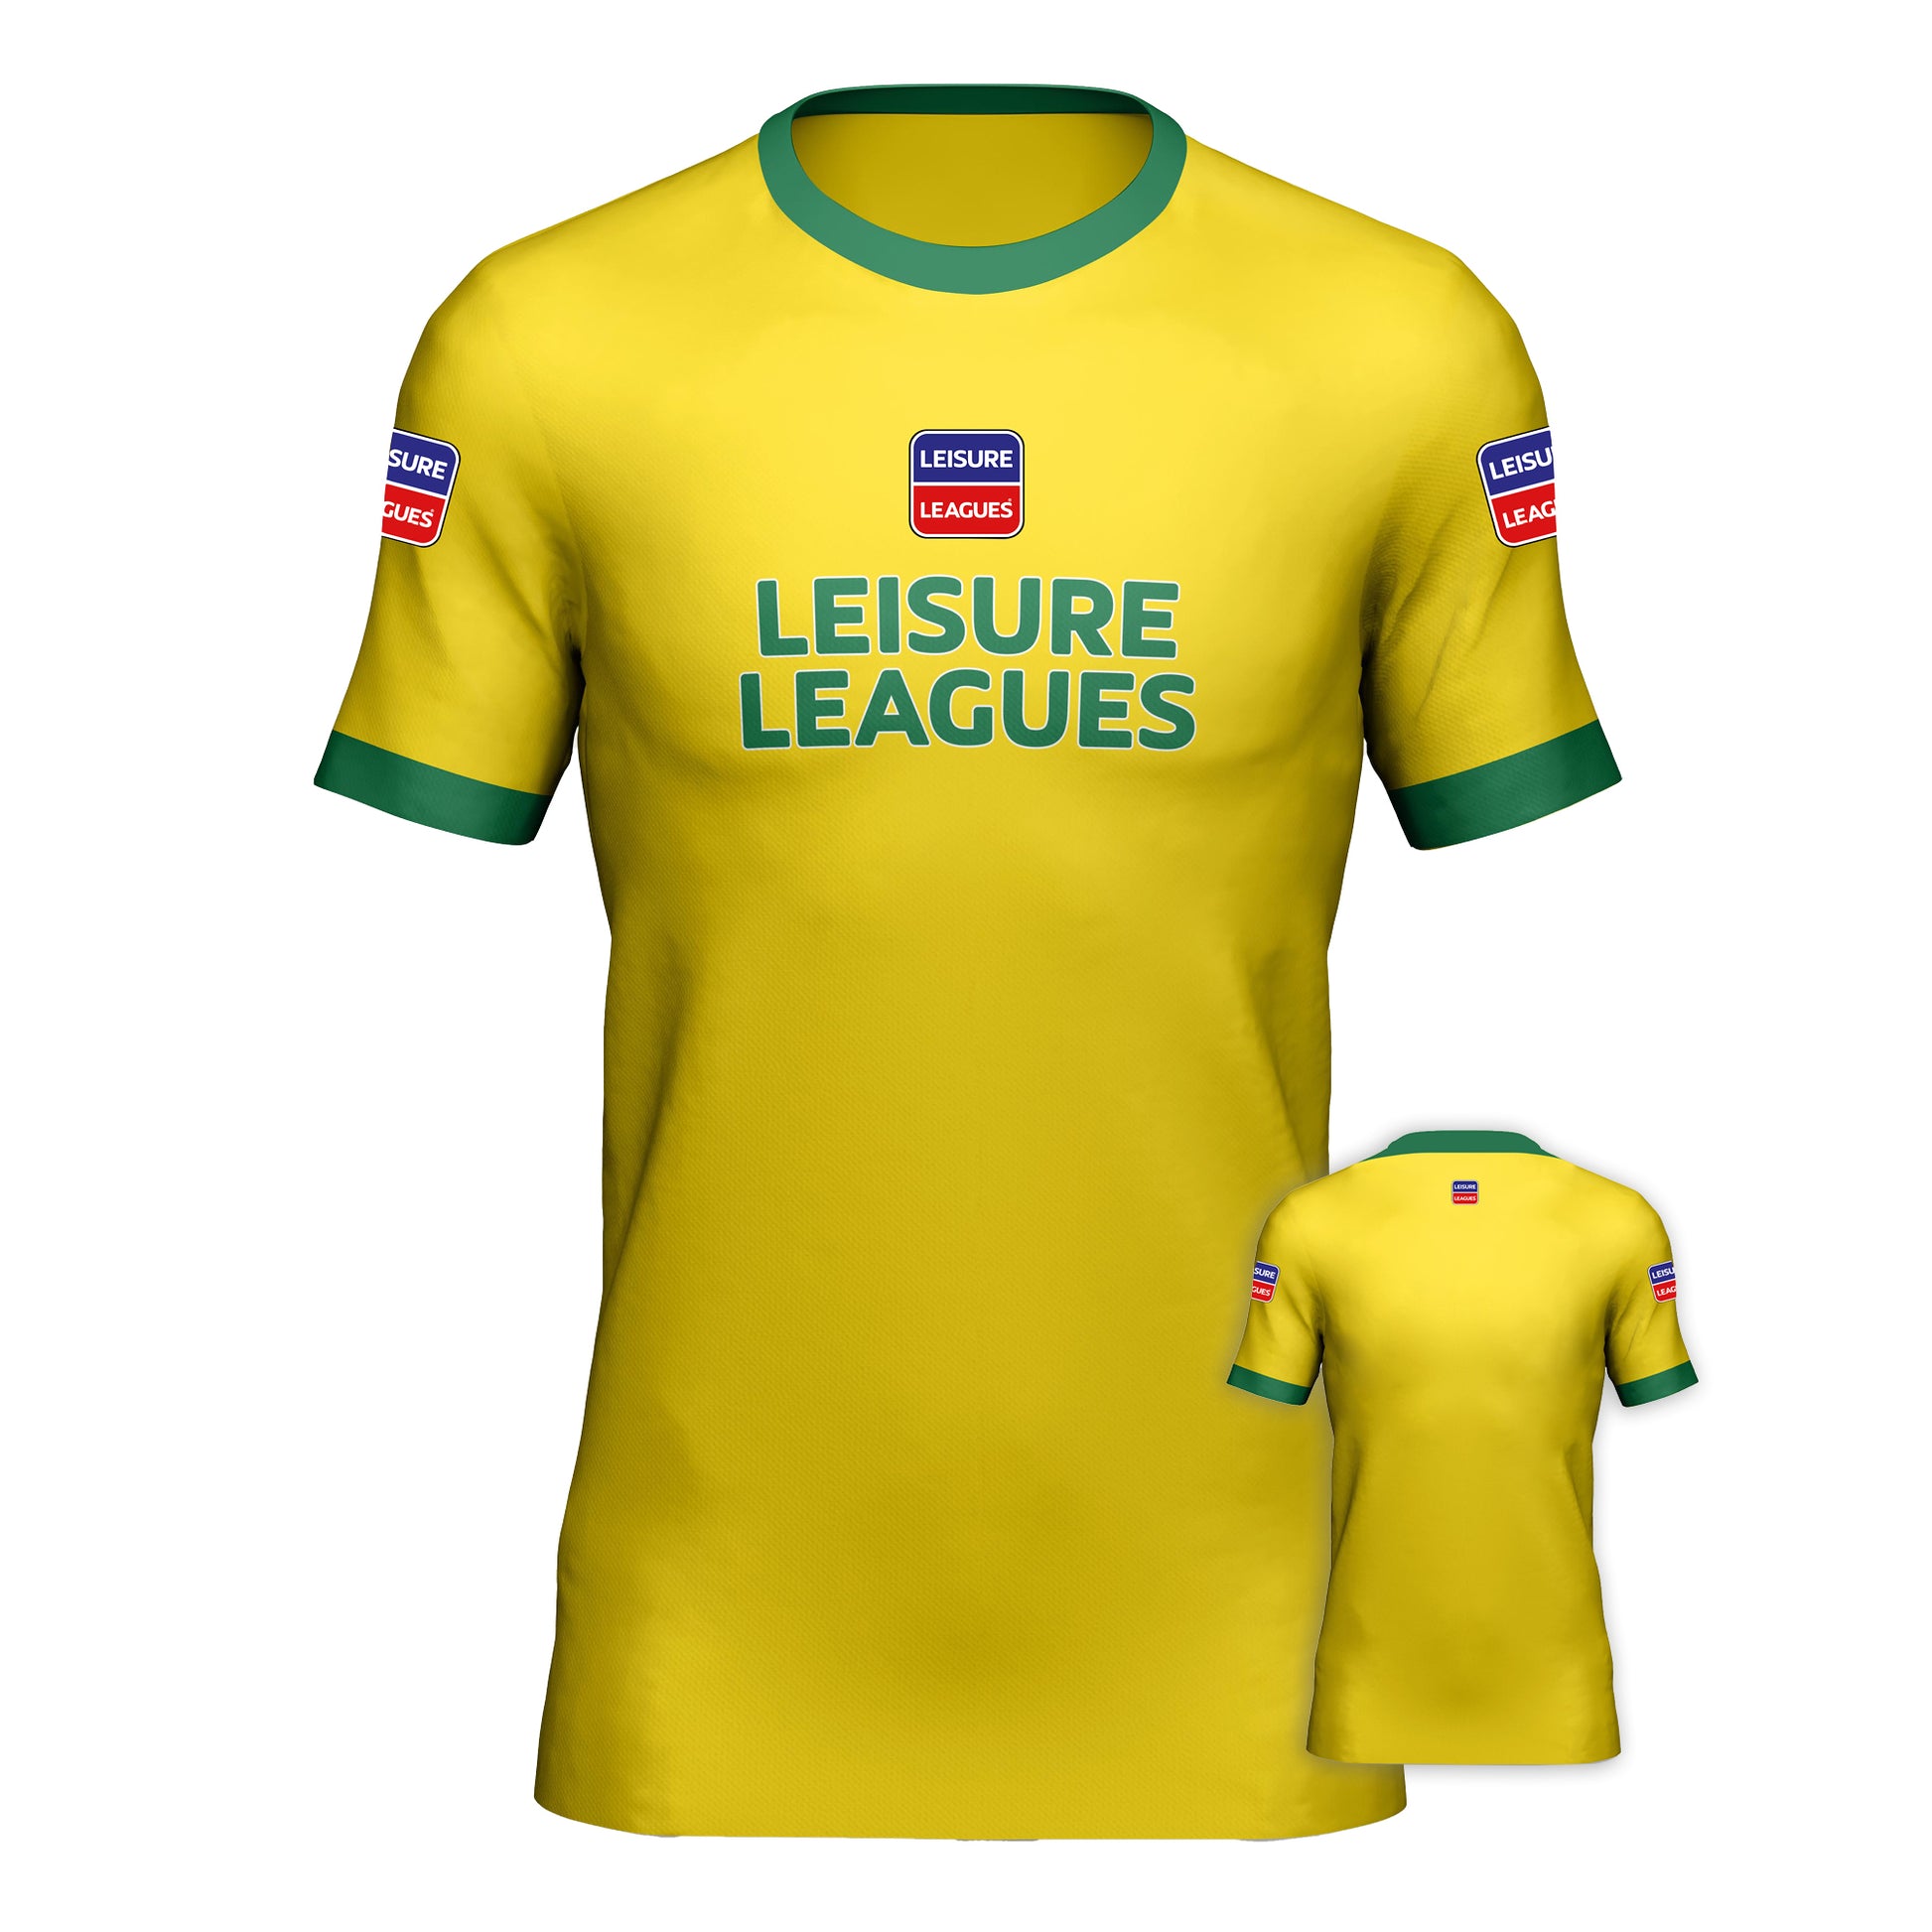 Football Shirt Leisure Leagues Kit Team Tshirt Brasilia Yellow